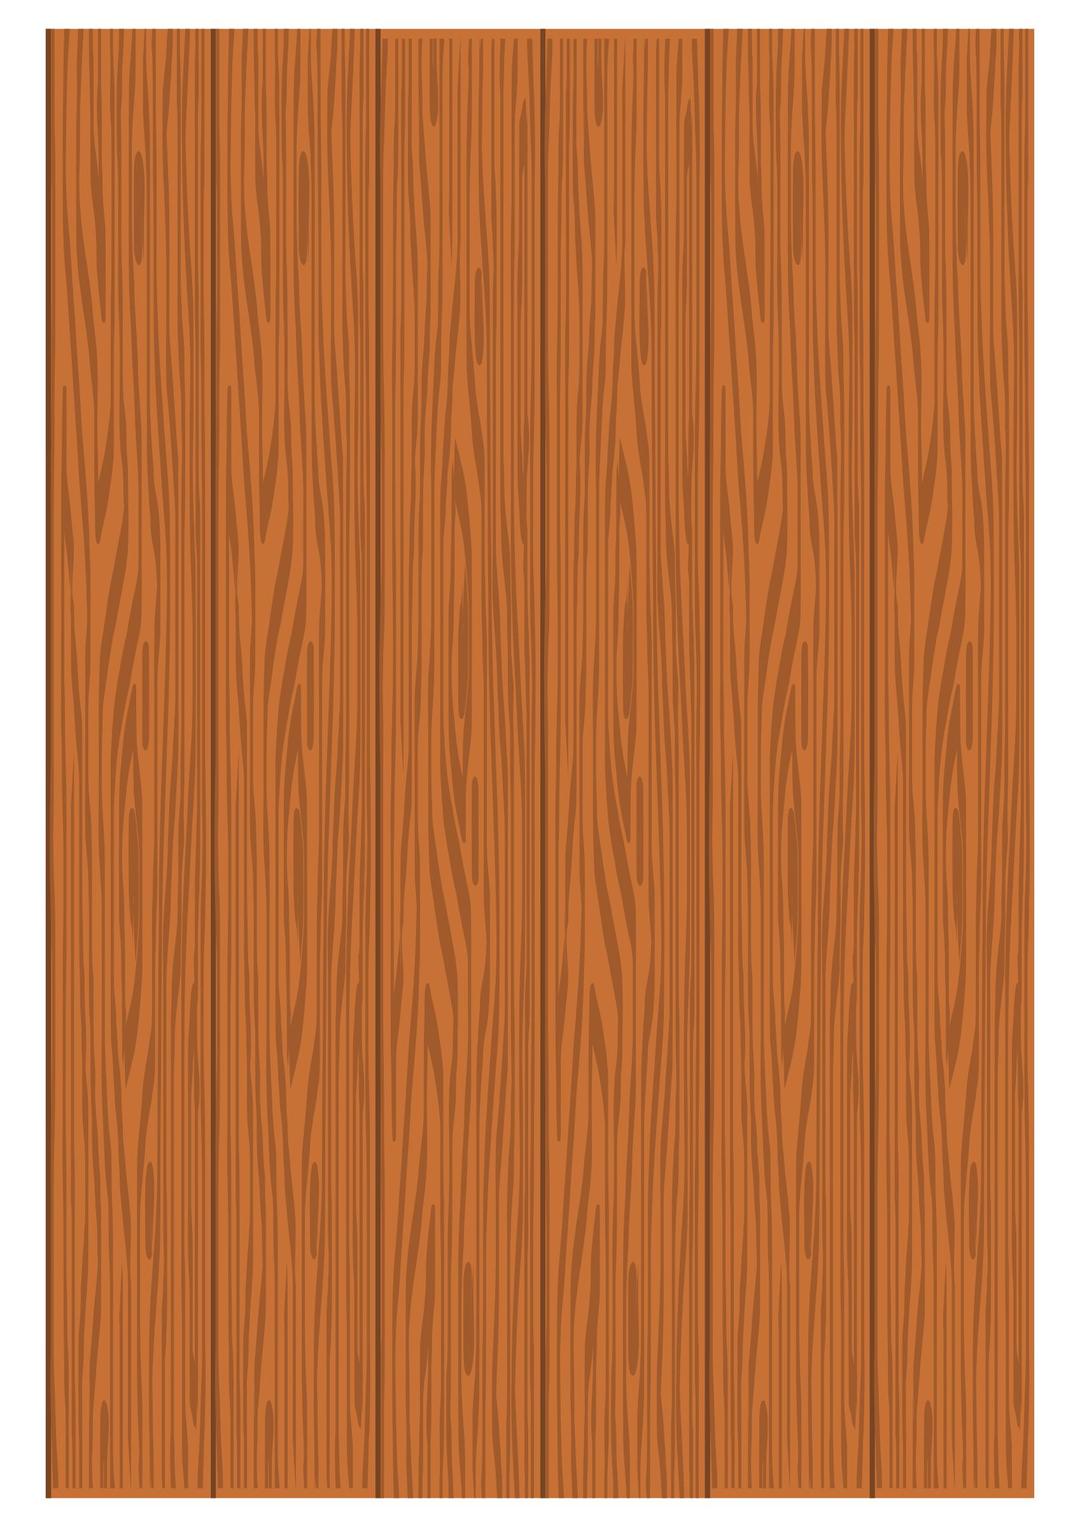 Wood board 1 png transparent